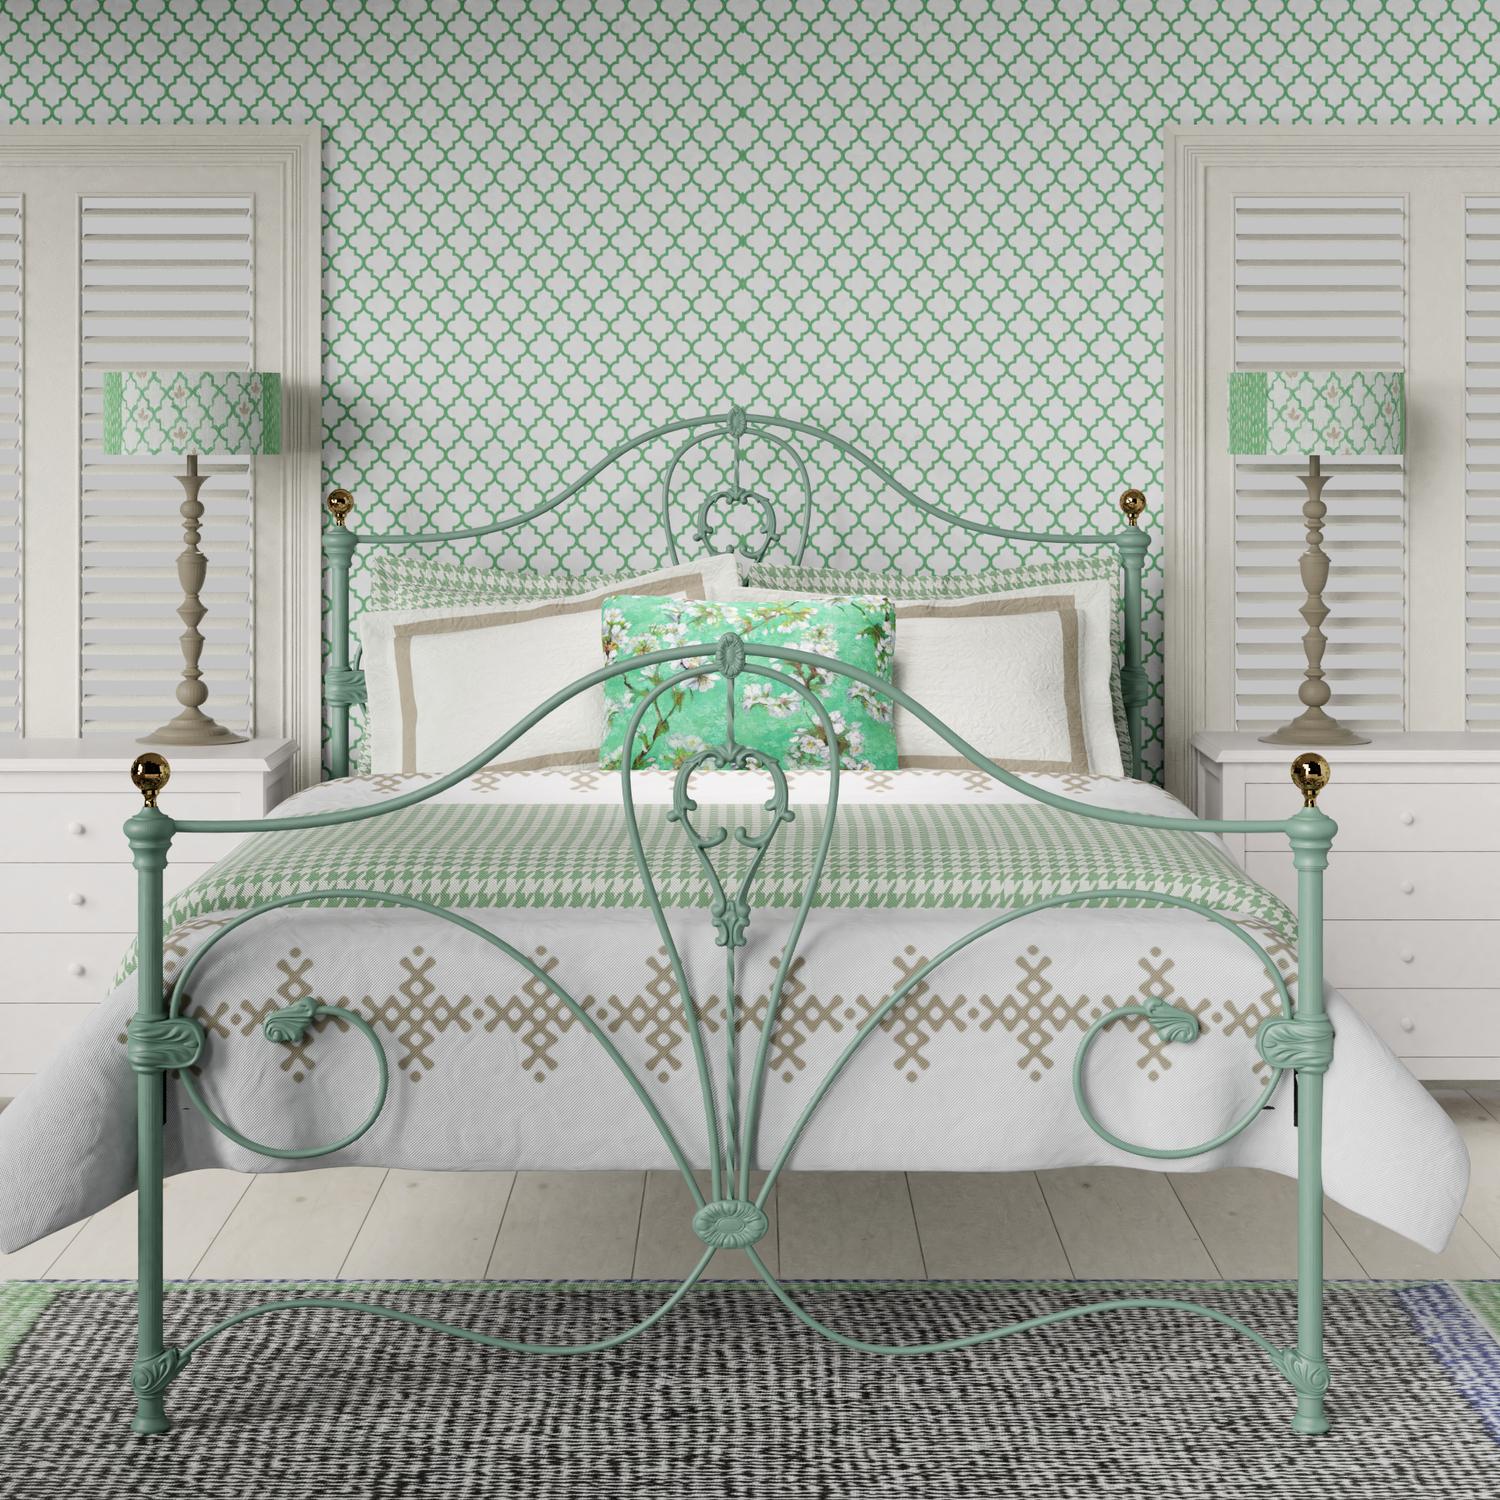 Melrose iron bed - Image green white